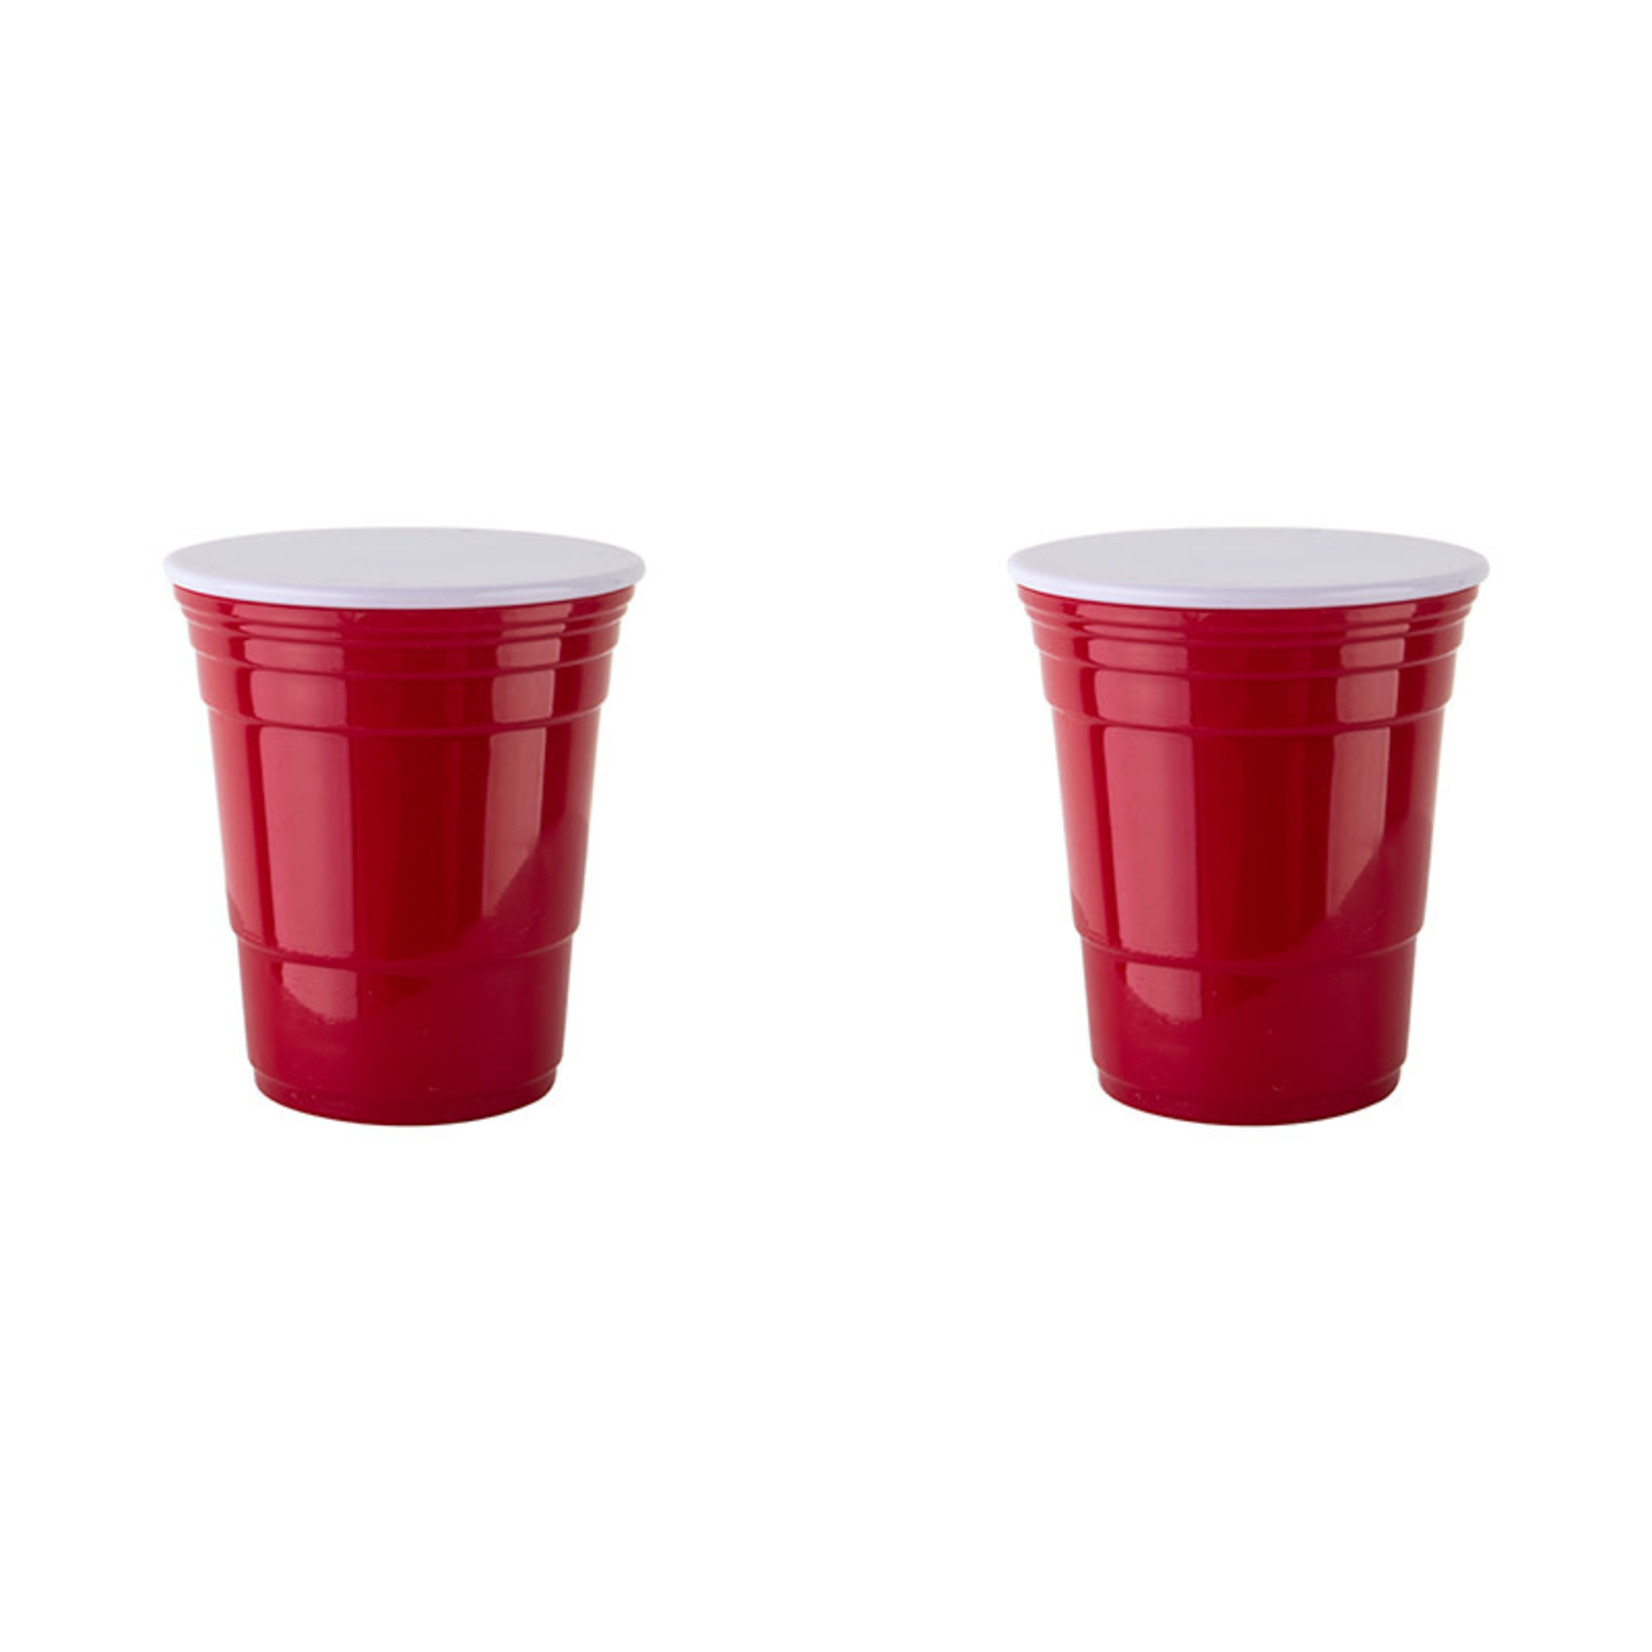 https://cdn.shoplightspeed.com/shops/650397/files/47042076/1652x1652x2/redcup-living-redcup-living-red-solo-cup-valve-cap.jpg